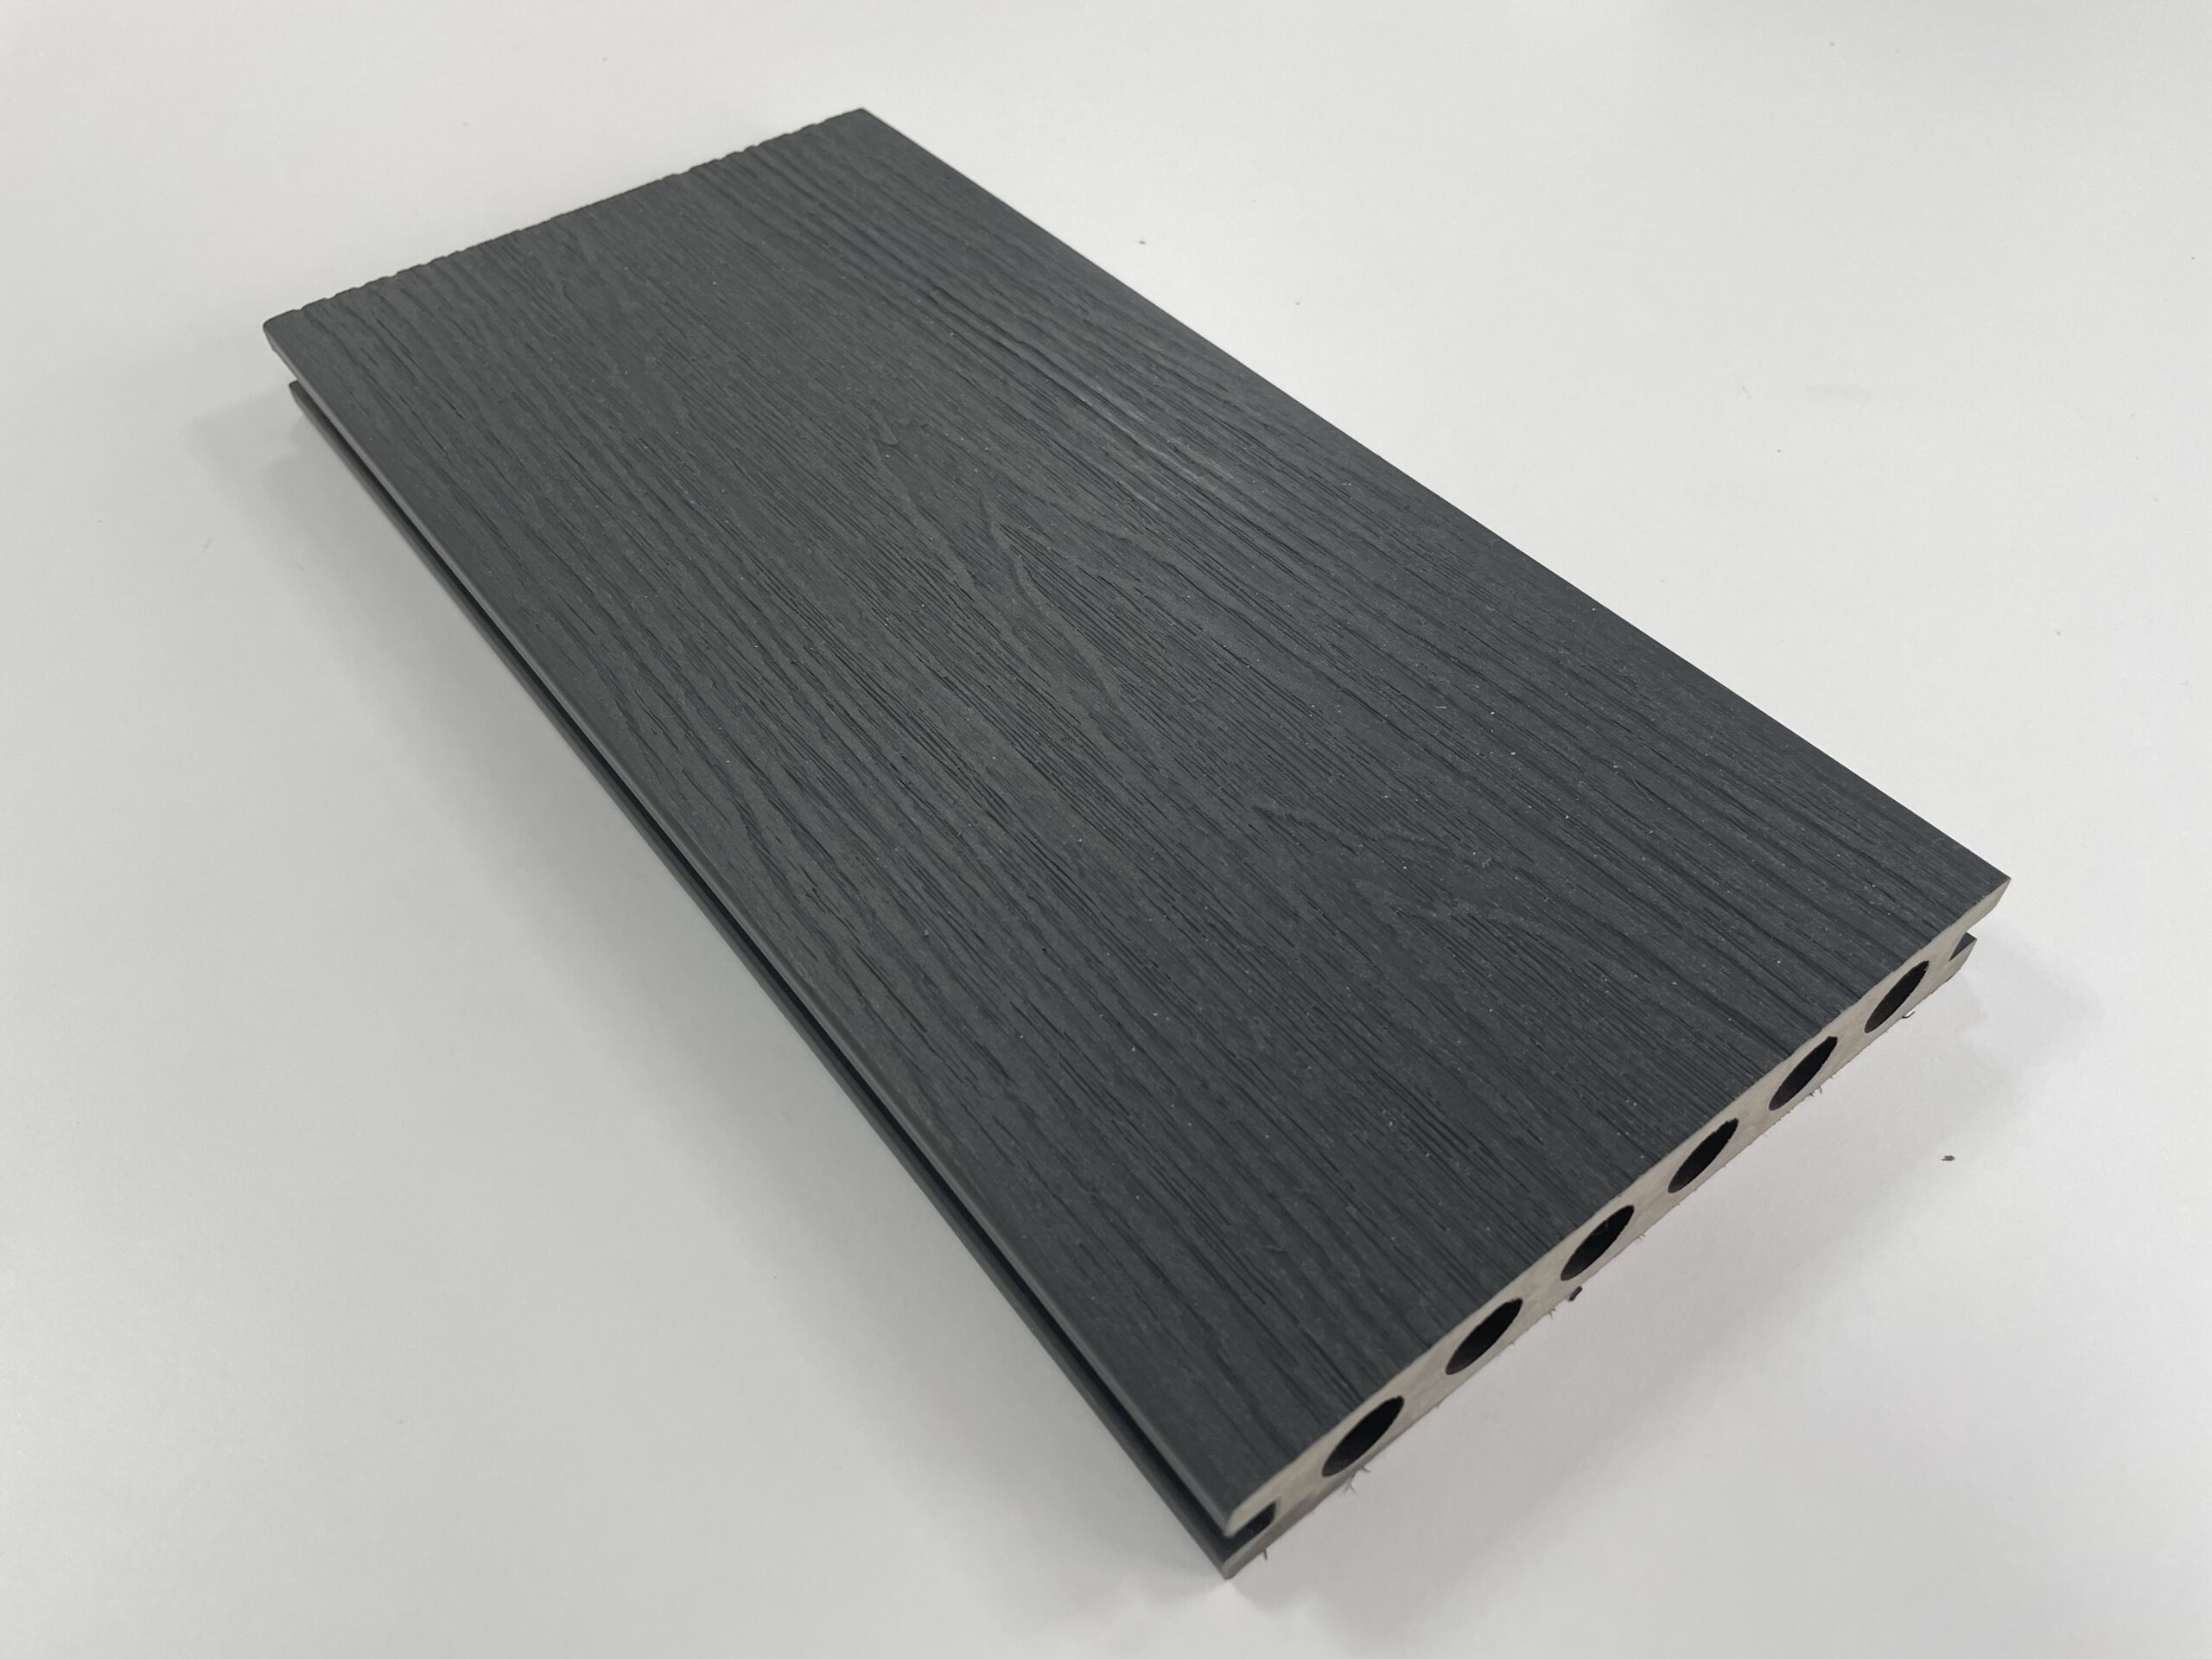 Tru-Deck-Composite-Decking-Black-scaled